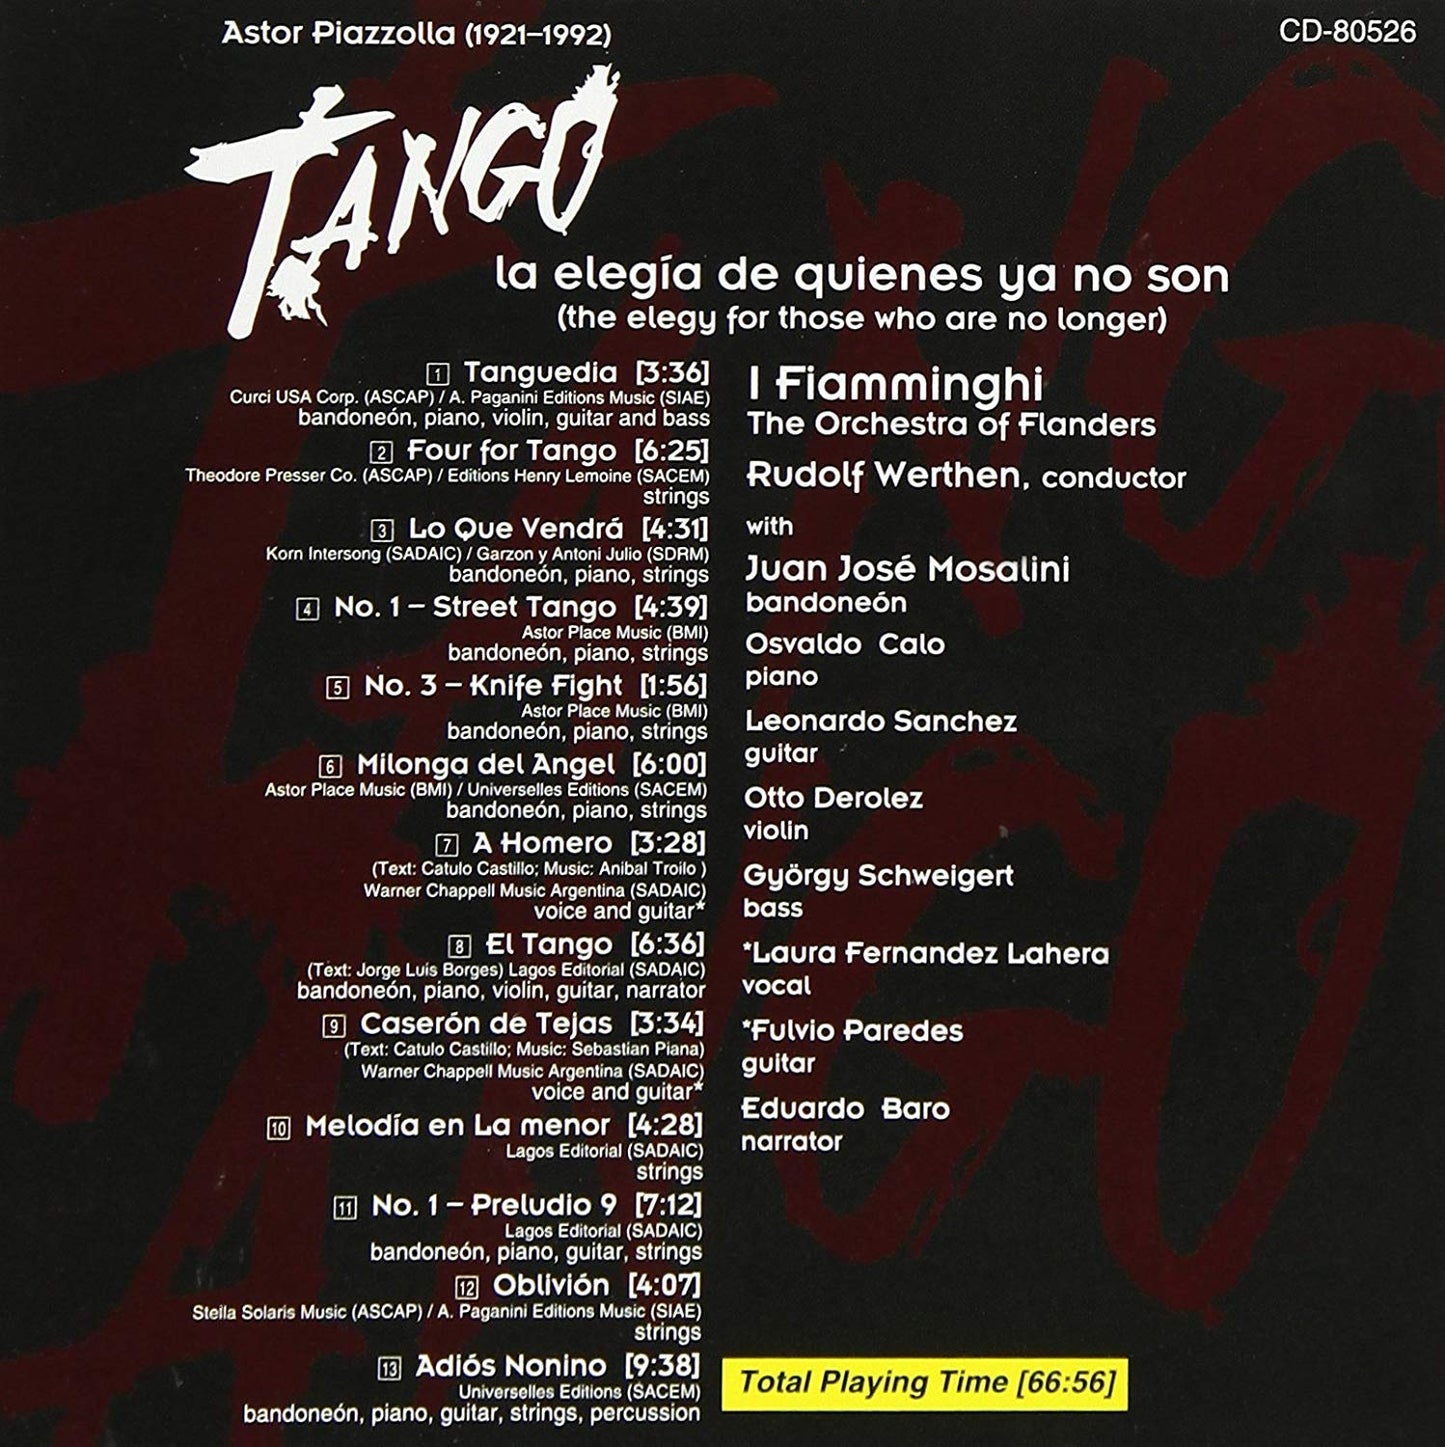 PIAZZOLLA: Tango - Elegy For Those Who Are No Longer - I Fiamminghi, Rudolf Werthen & Juan Jose Mosalini